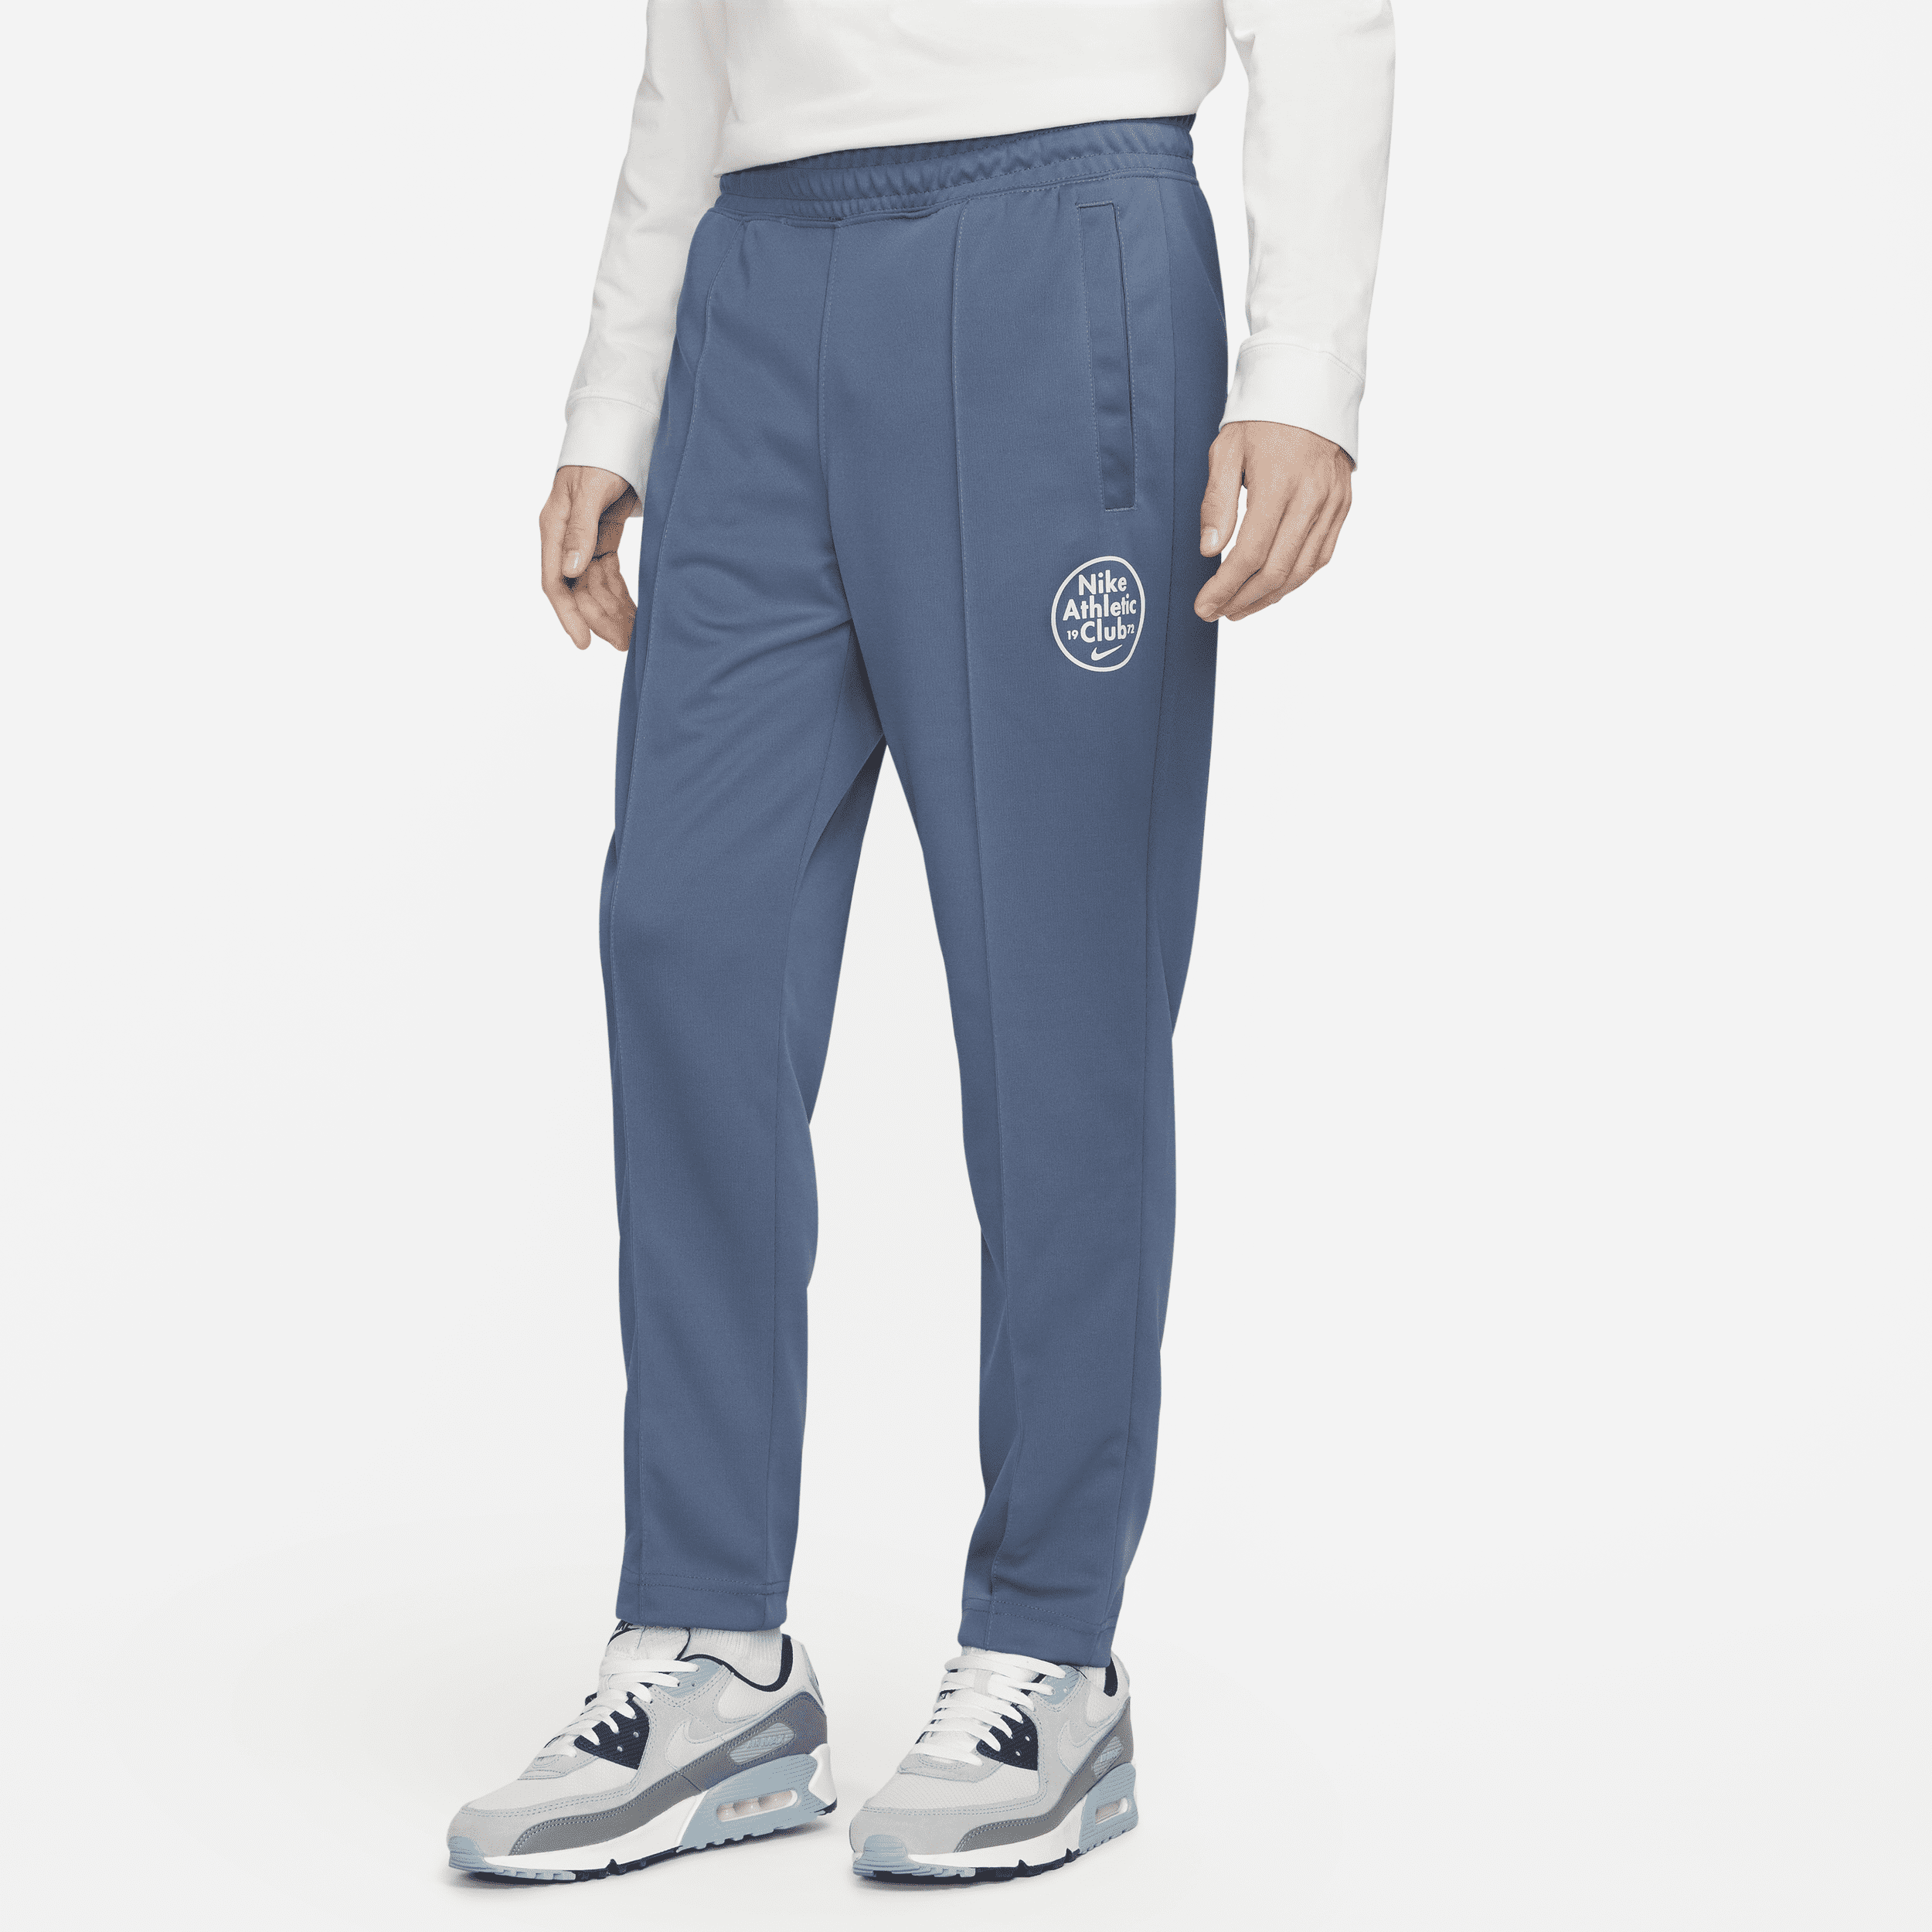 Nike Sportswear-bukser med pressefolder til mænd - blå